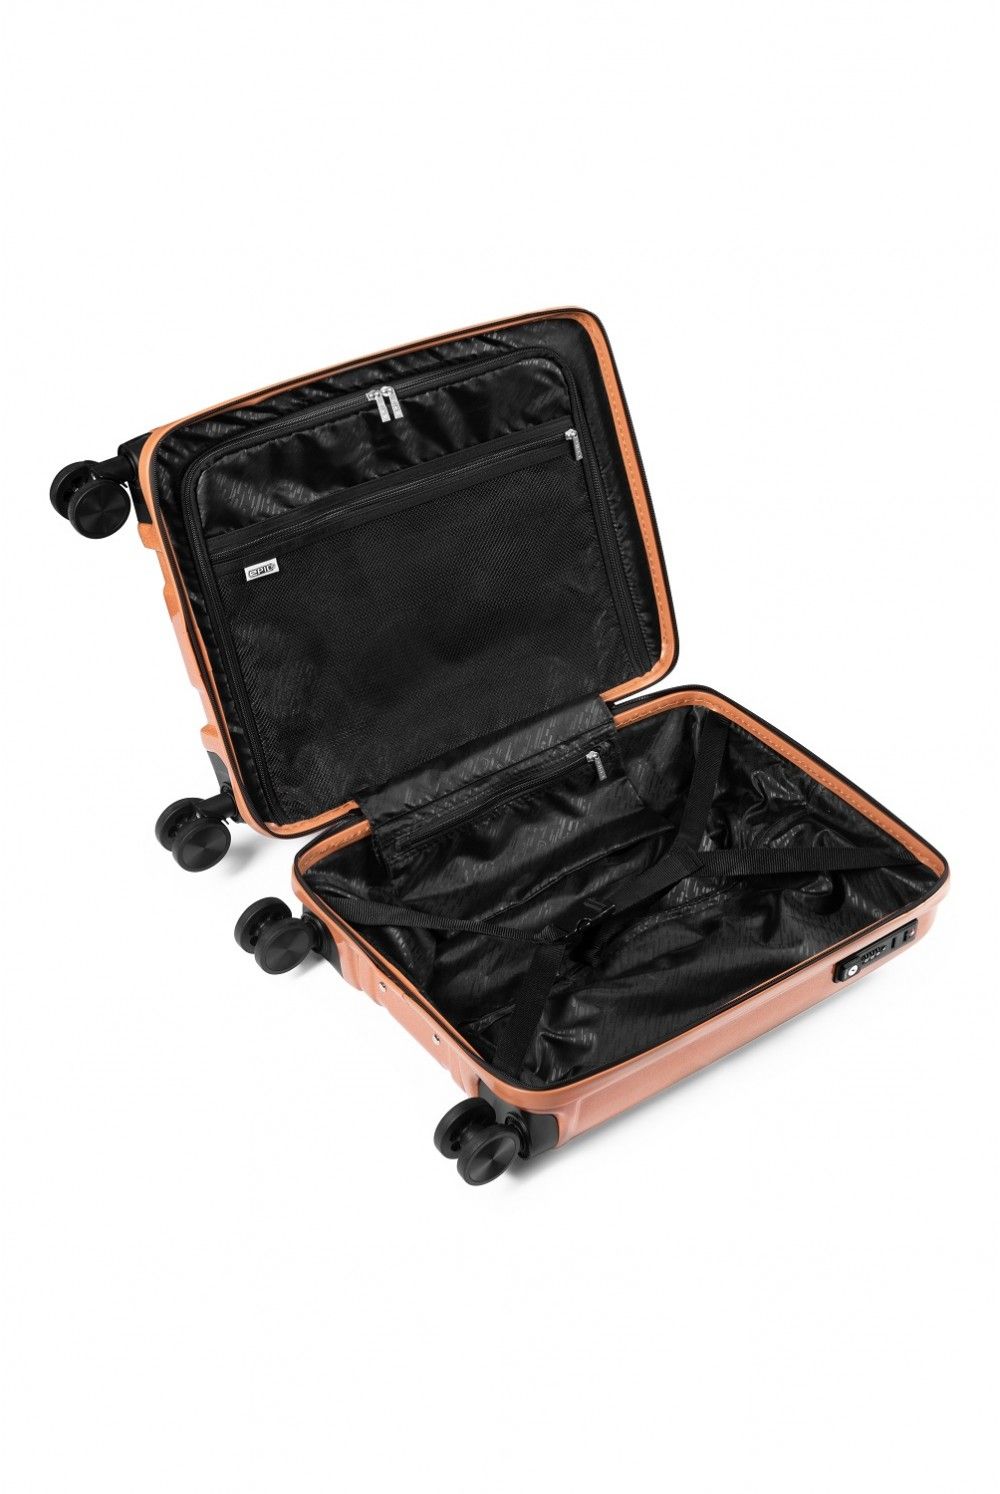 Hand luggage Epic Reflex Evo 55cm 4 wheel copper